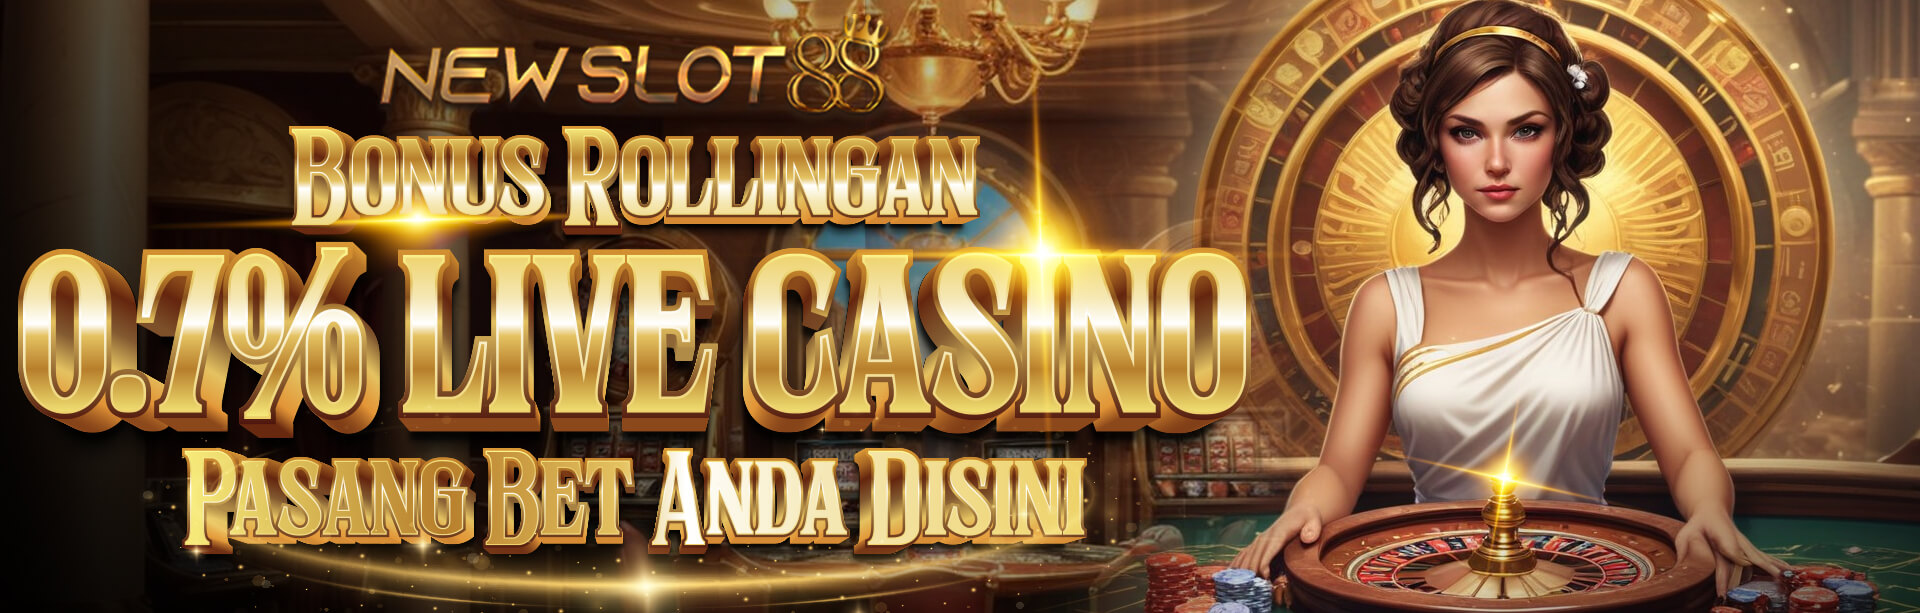 Bonus Rollingan Live Casino 0.7%